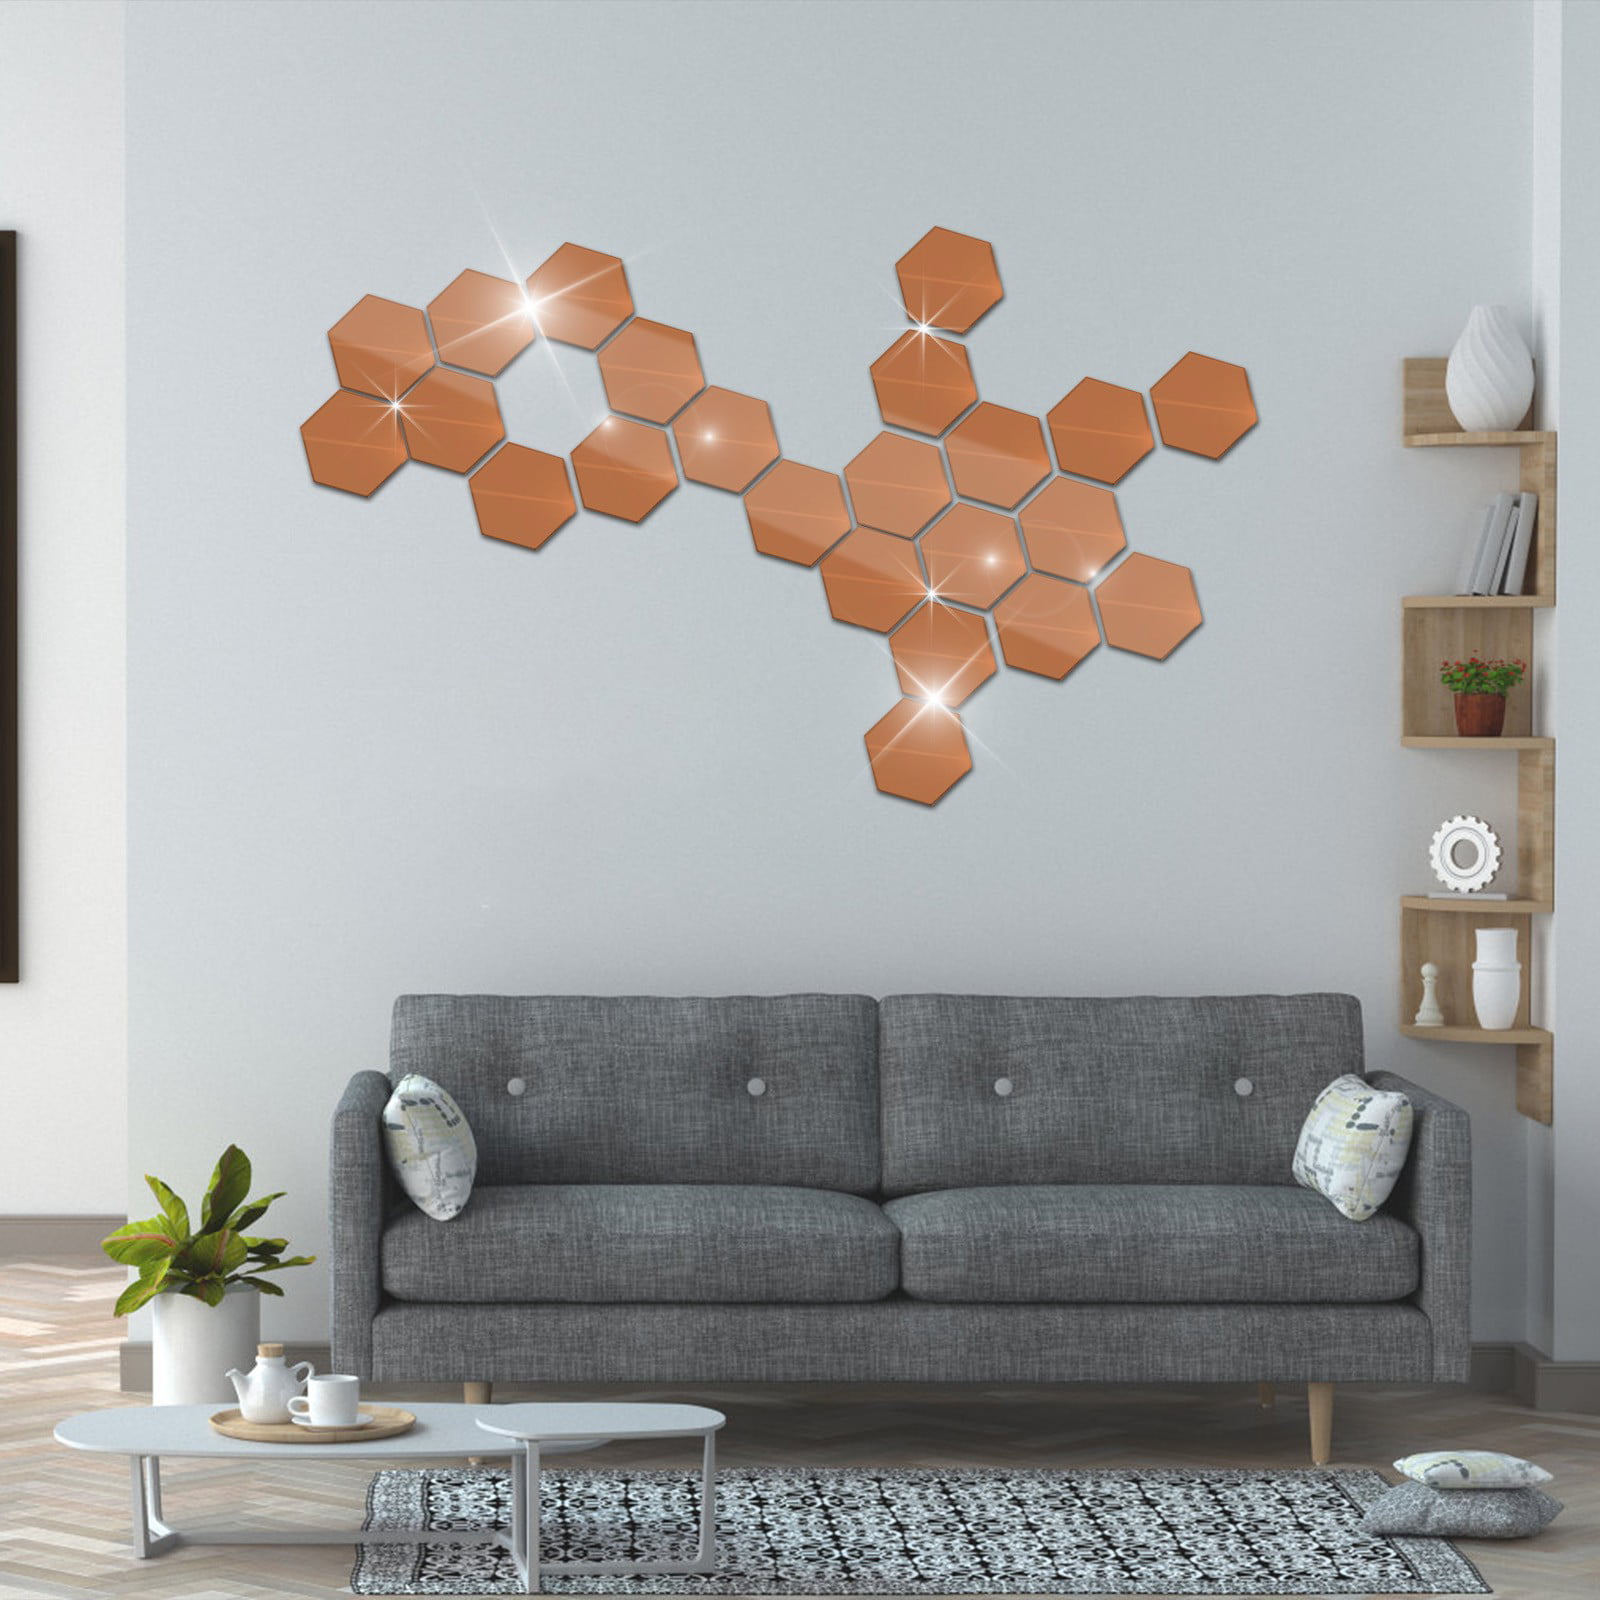 MSJUHEG Peel And Stick Gold Wall With Wall Home Adhesive Wall 3D Acrylic Decor Stereo Hexagon Sticker Diy Wallpaper Mirror Art Decor